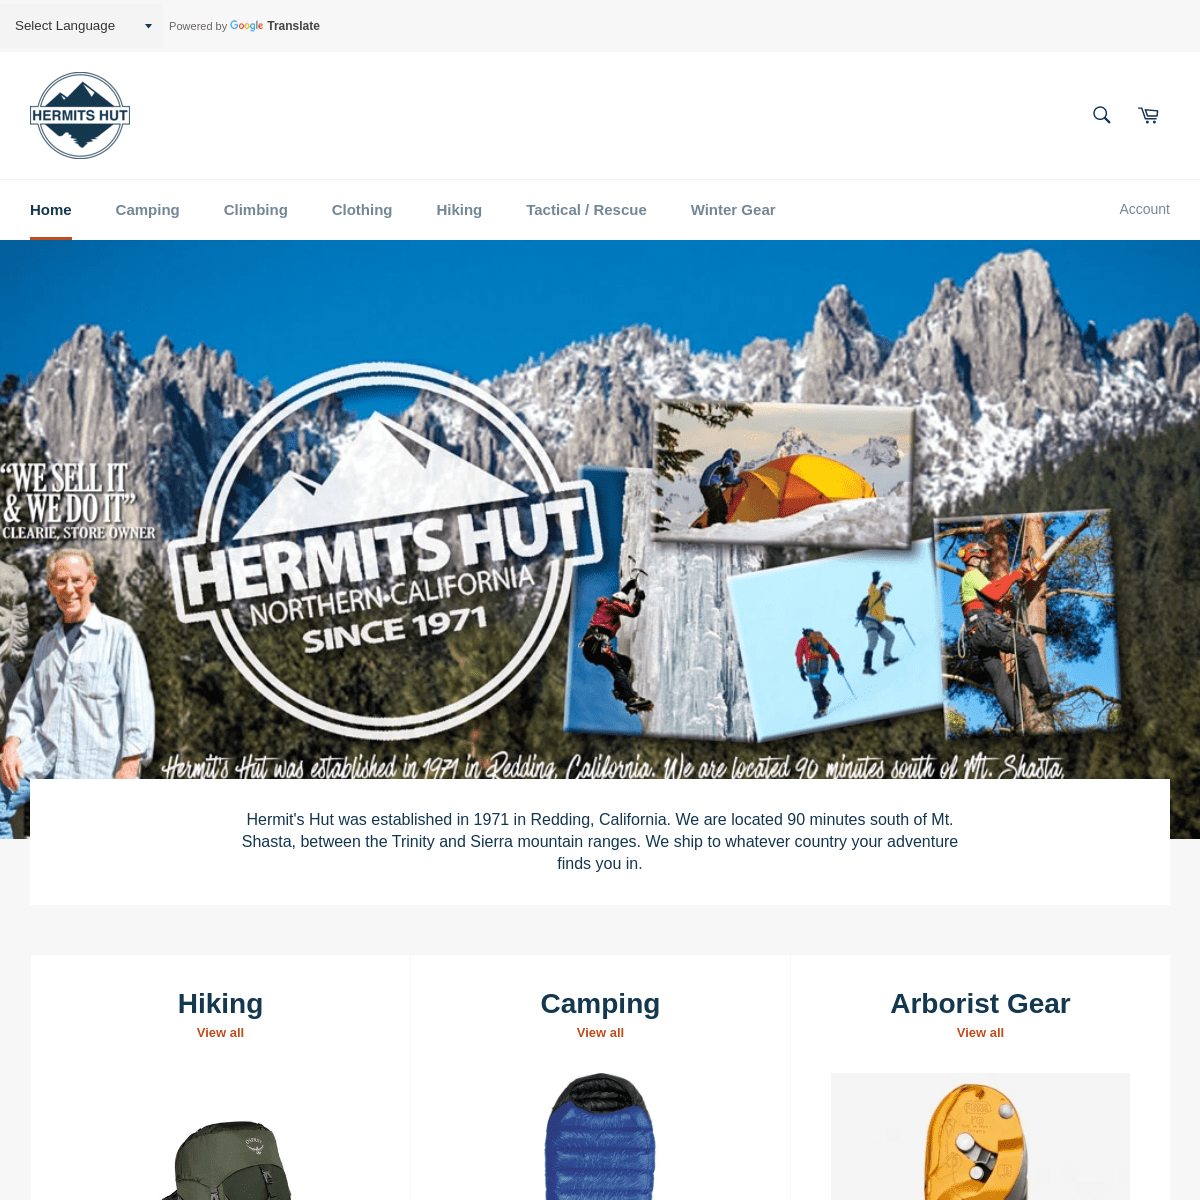 A complete backup of hermitshut.com